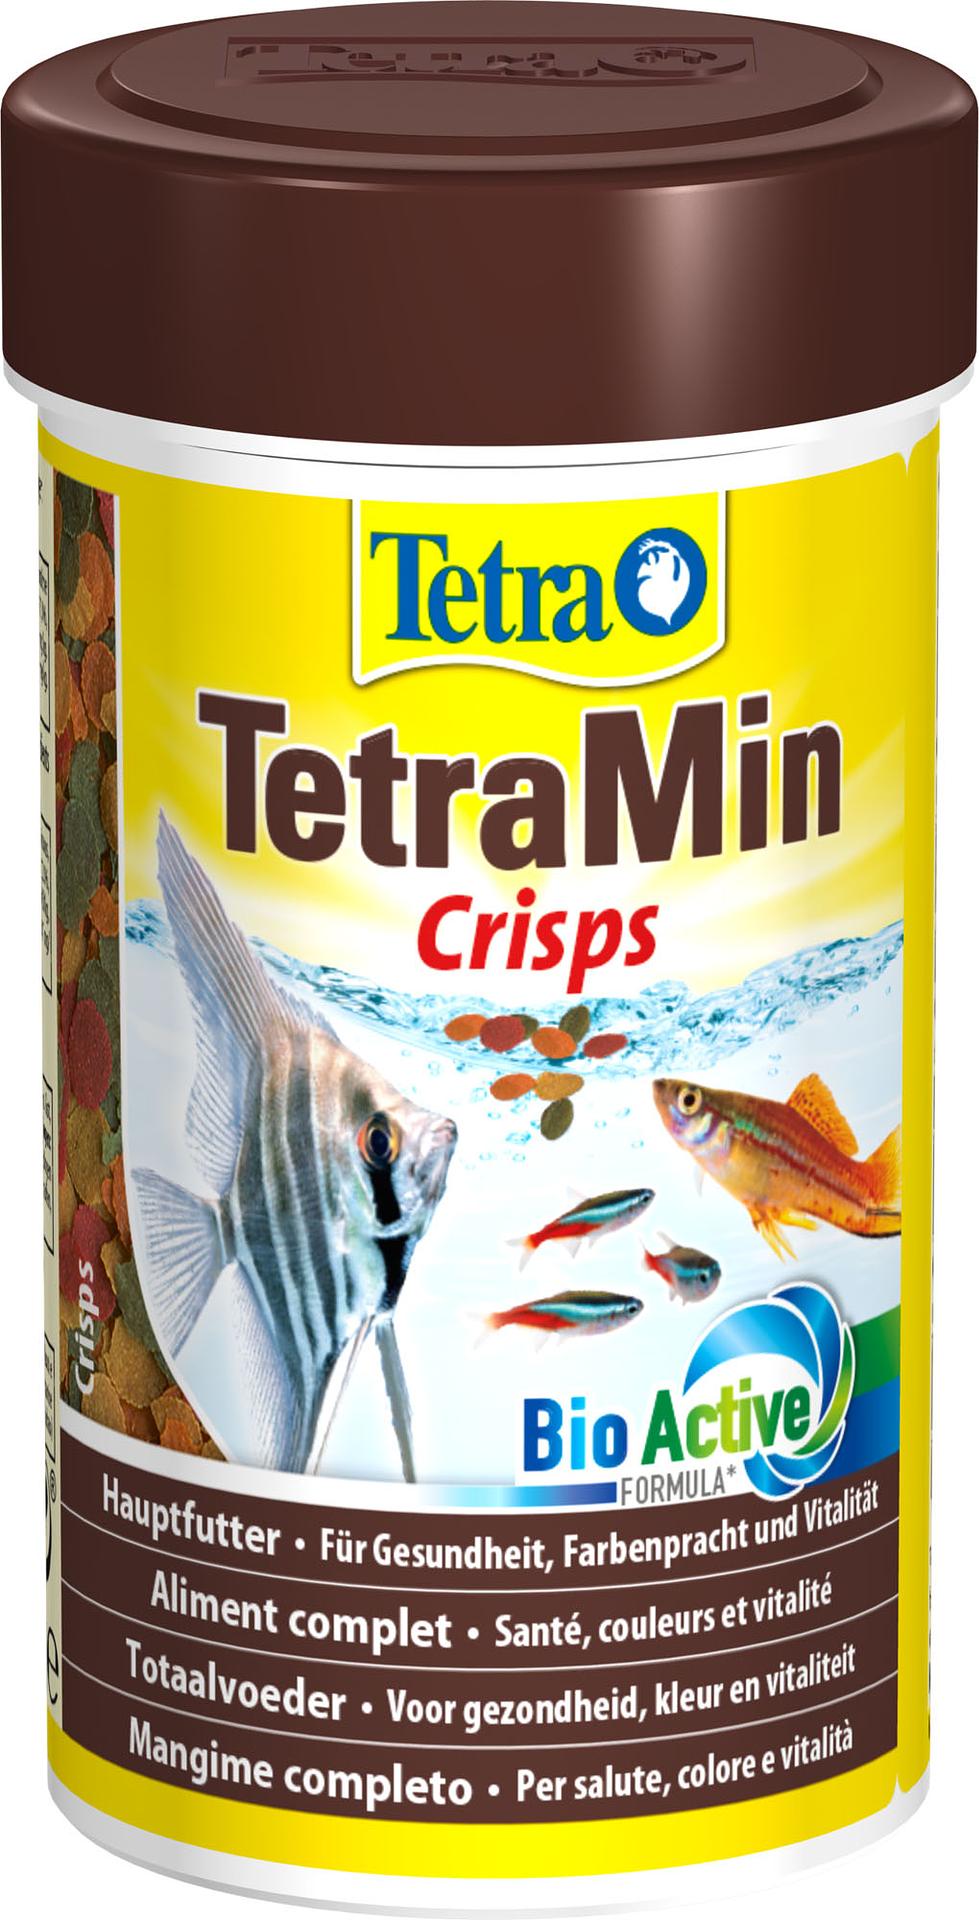 TetraMin Pro Crisps